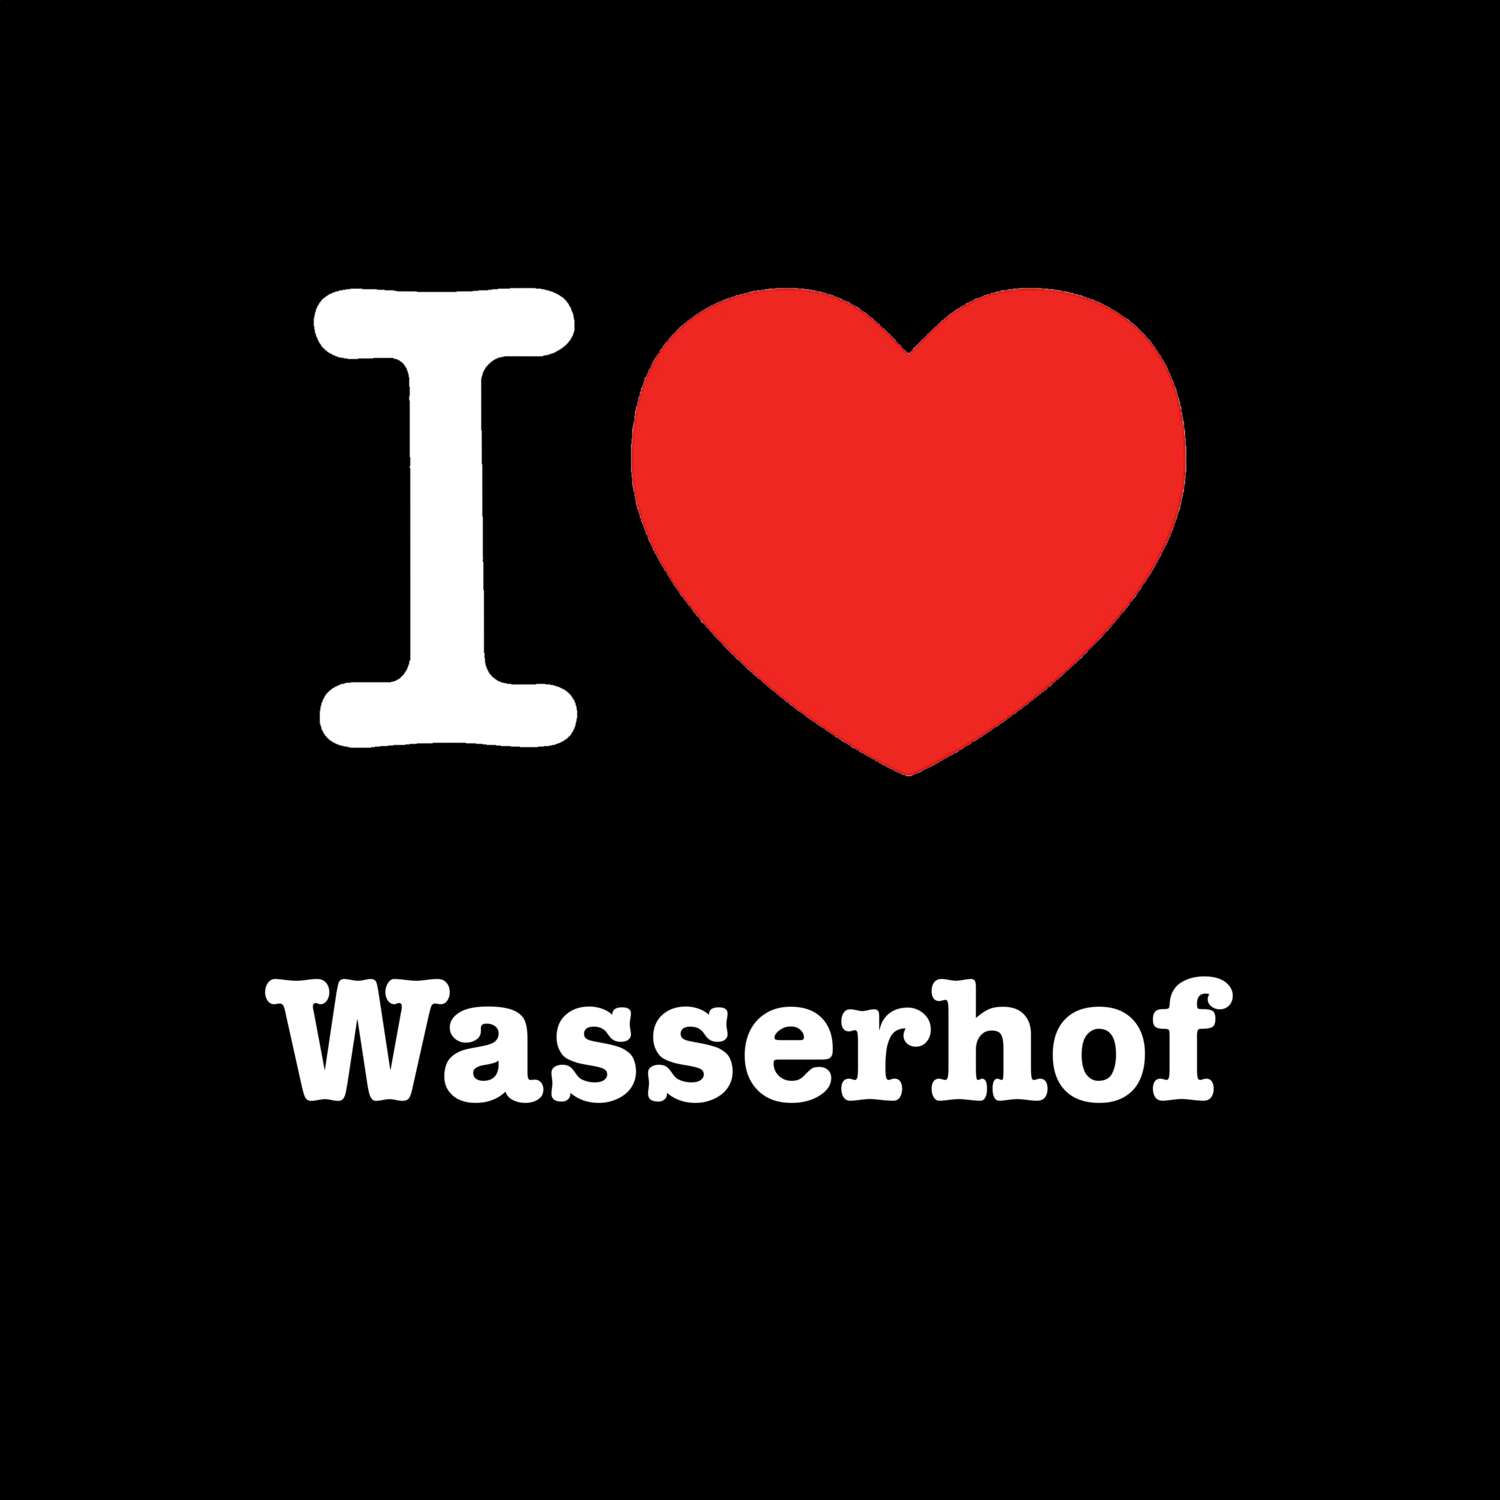 Wasserhof T-Shirt »I love«